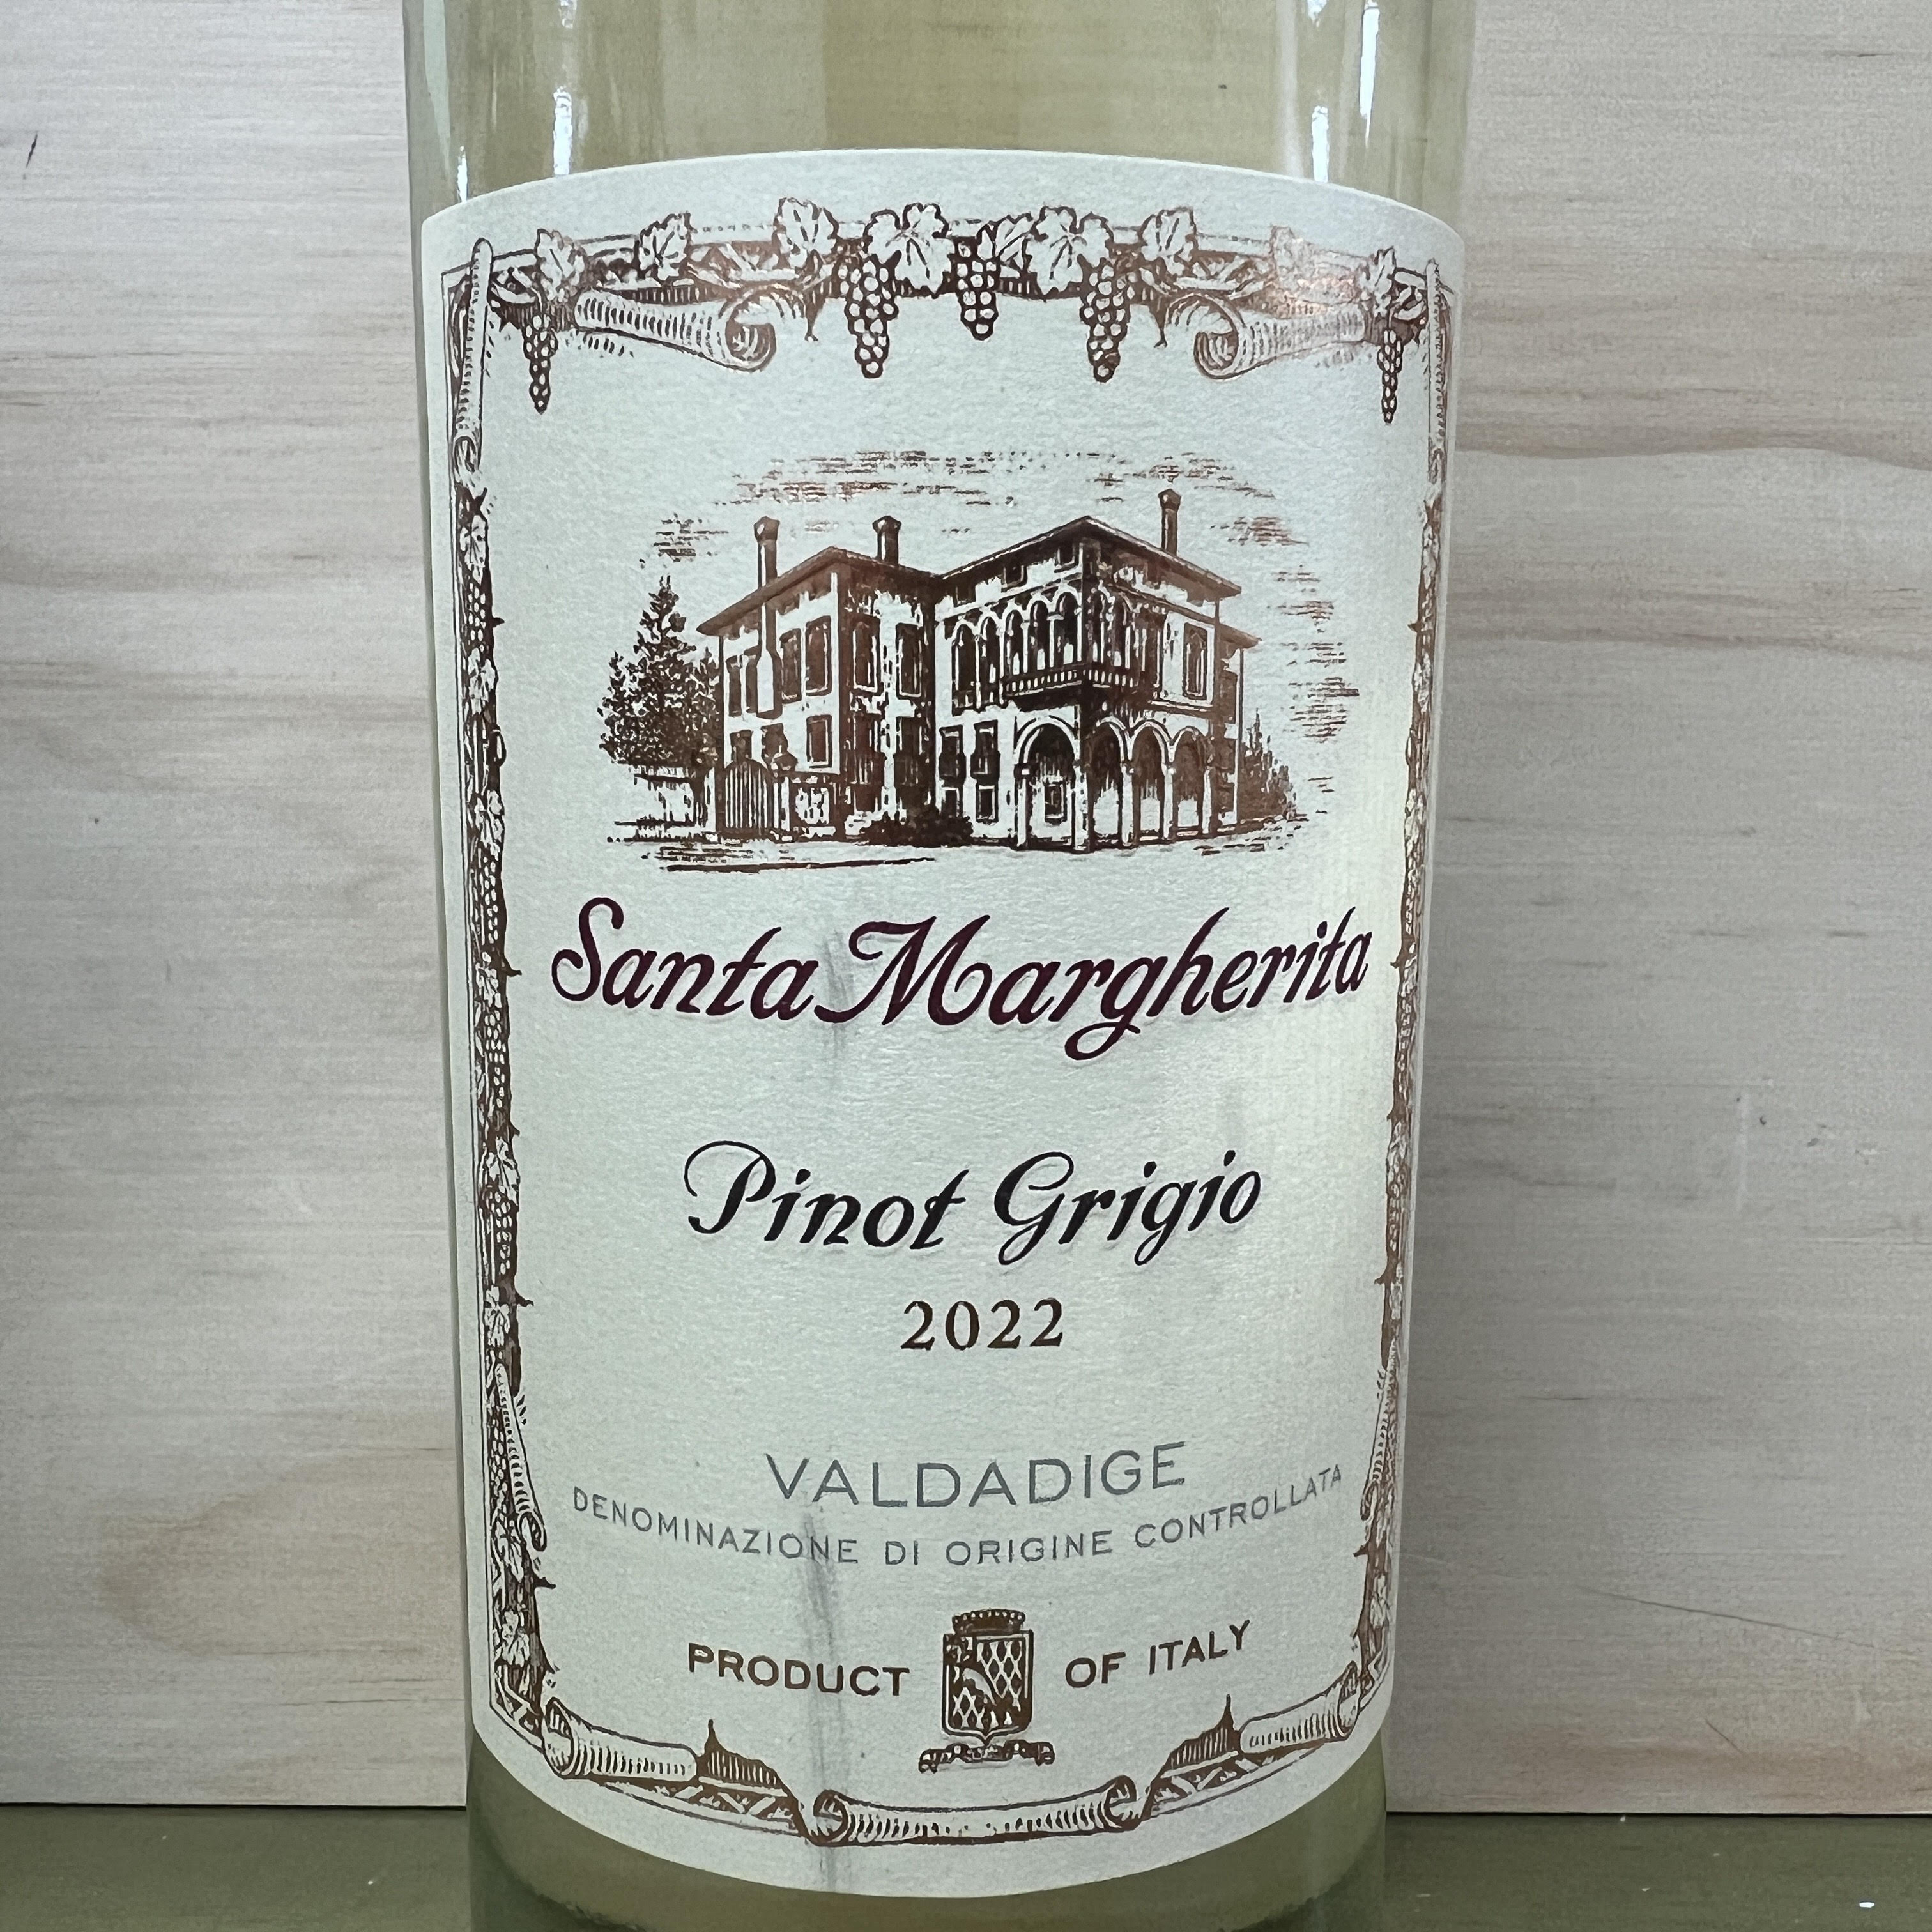 Santa Margherita Valdadige Pinot Grigio 2022